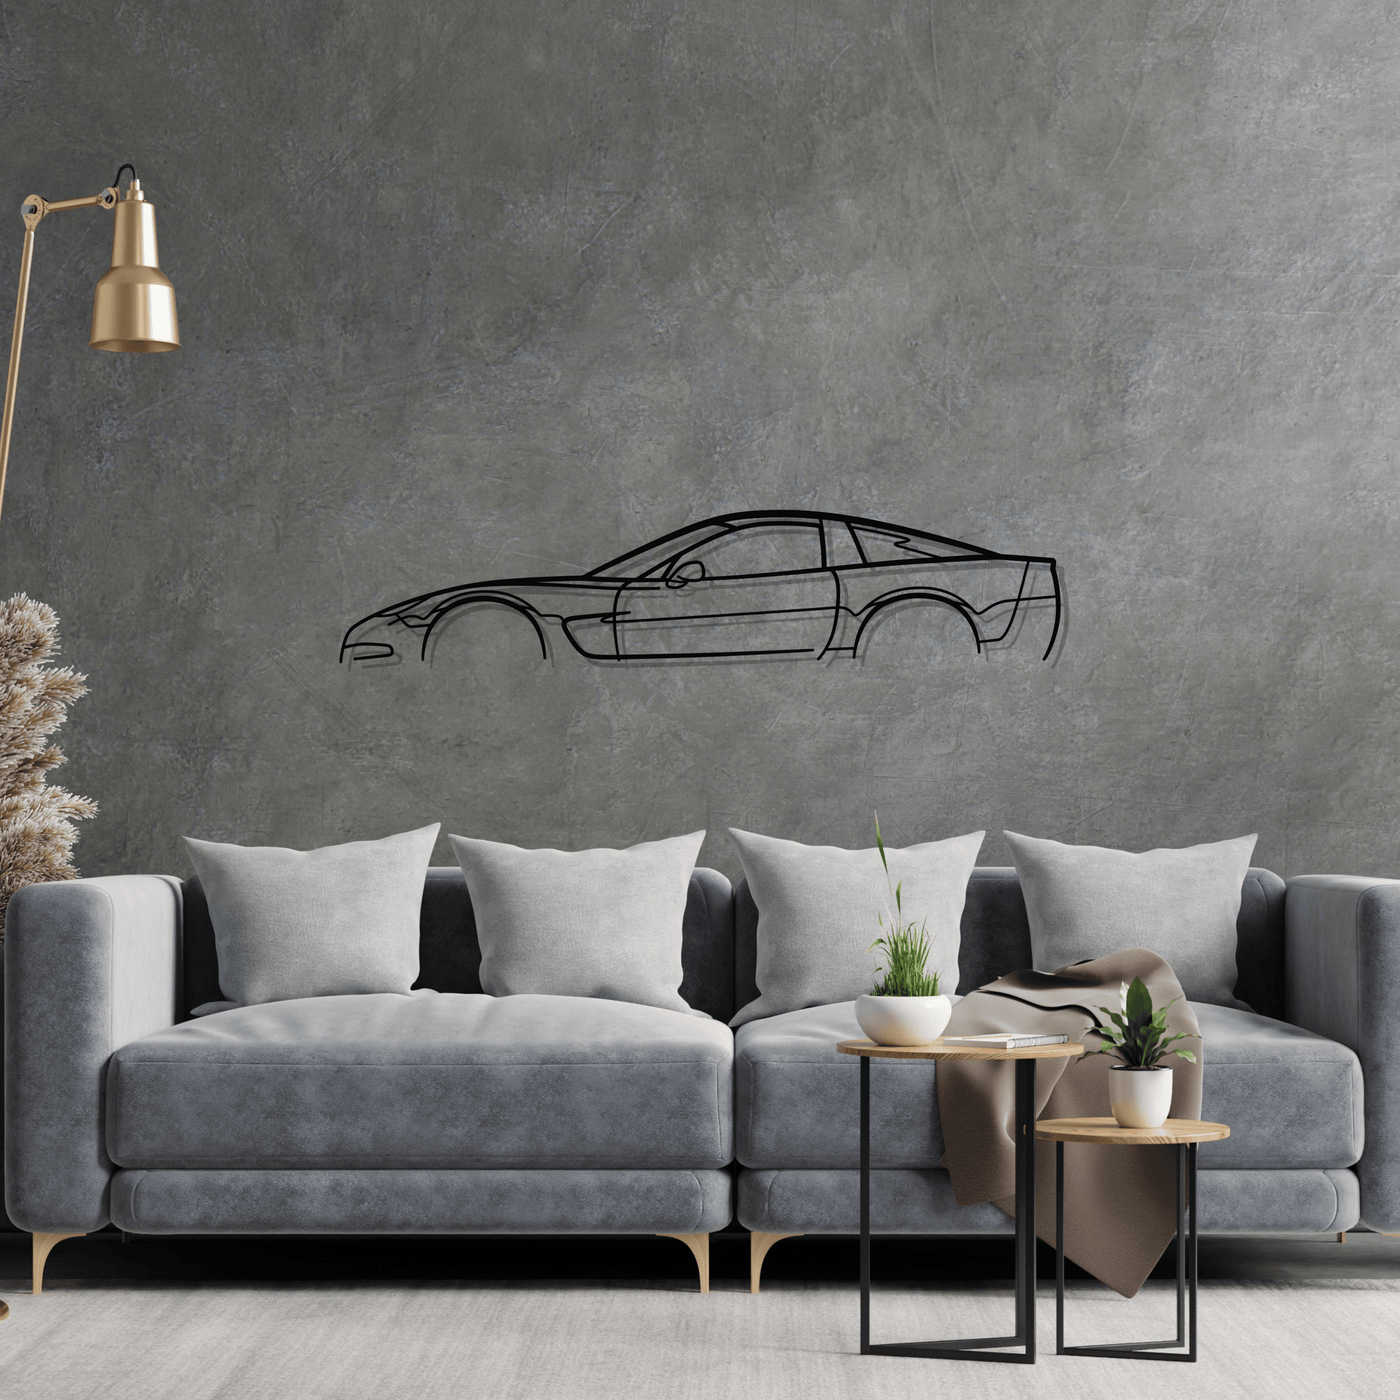 Corvette c5 Classic Silhouette Metal Wall Art